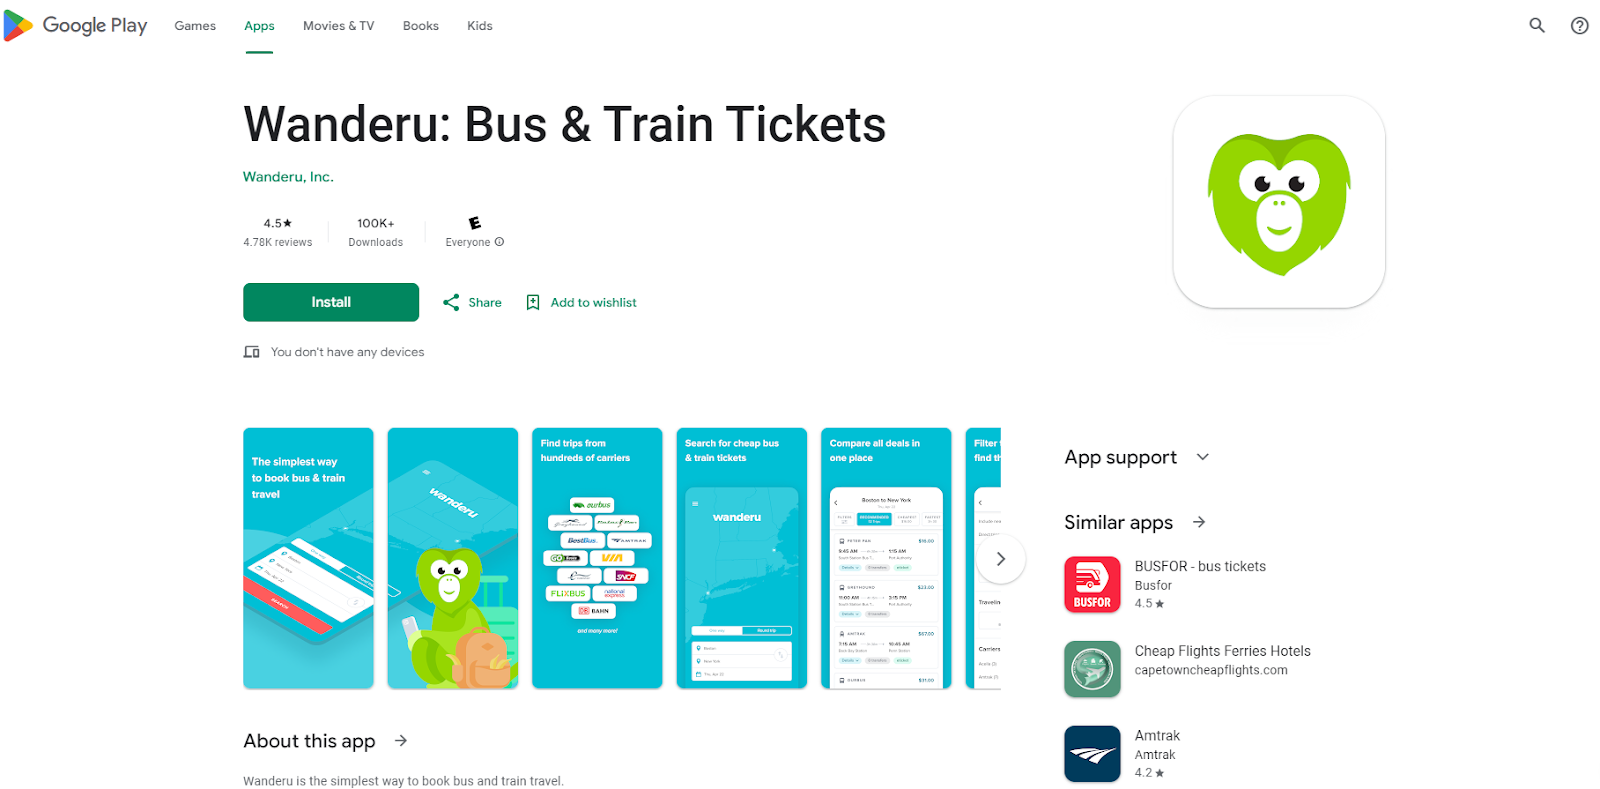 How to Download Wanderu: Bus & Train Tickets